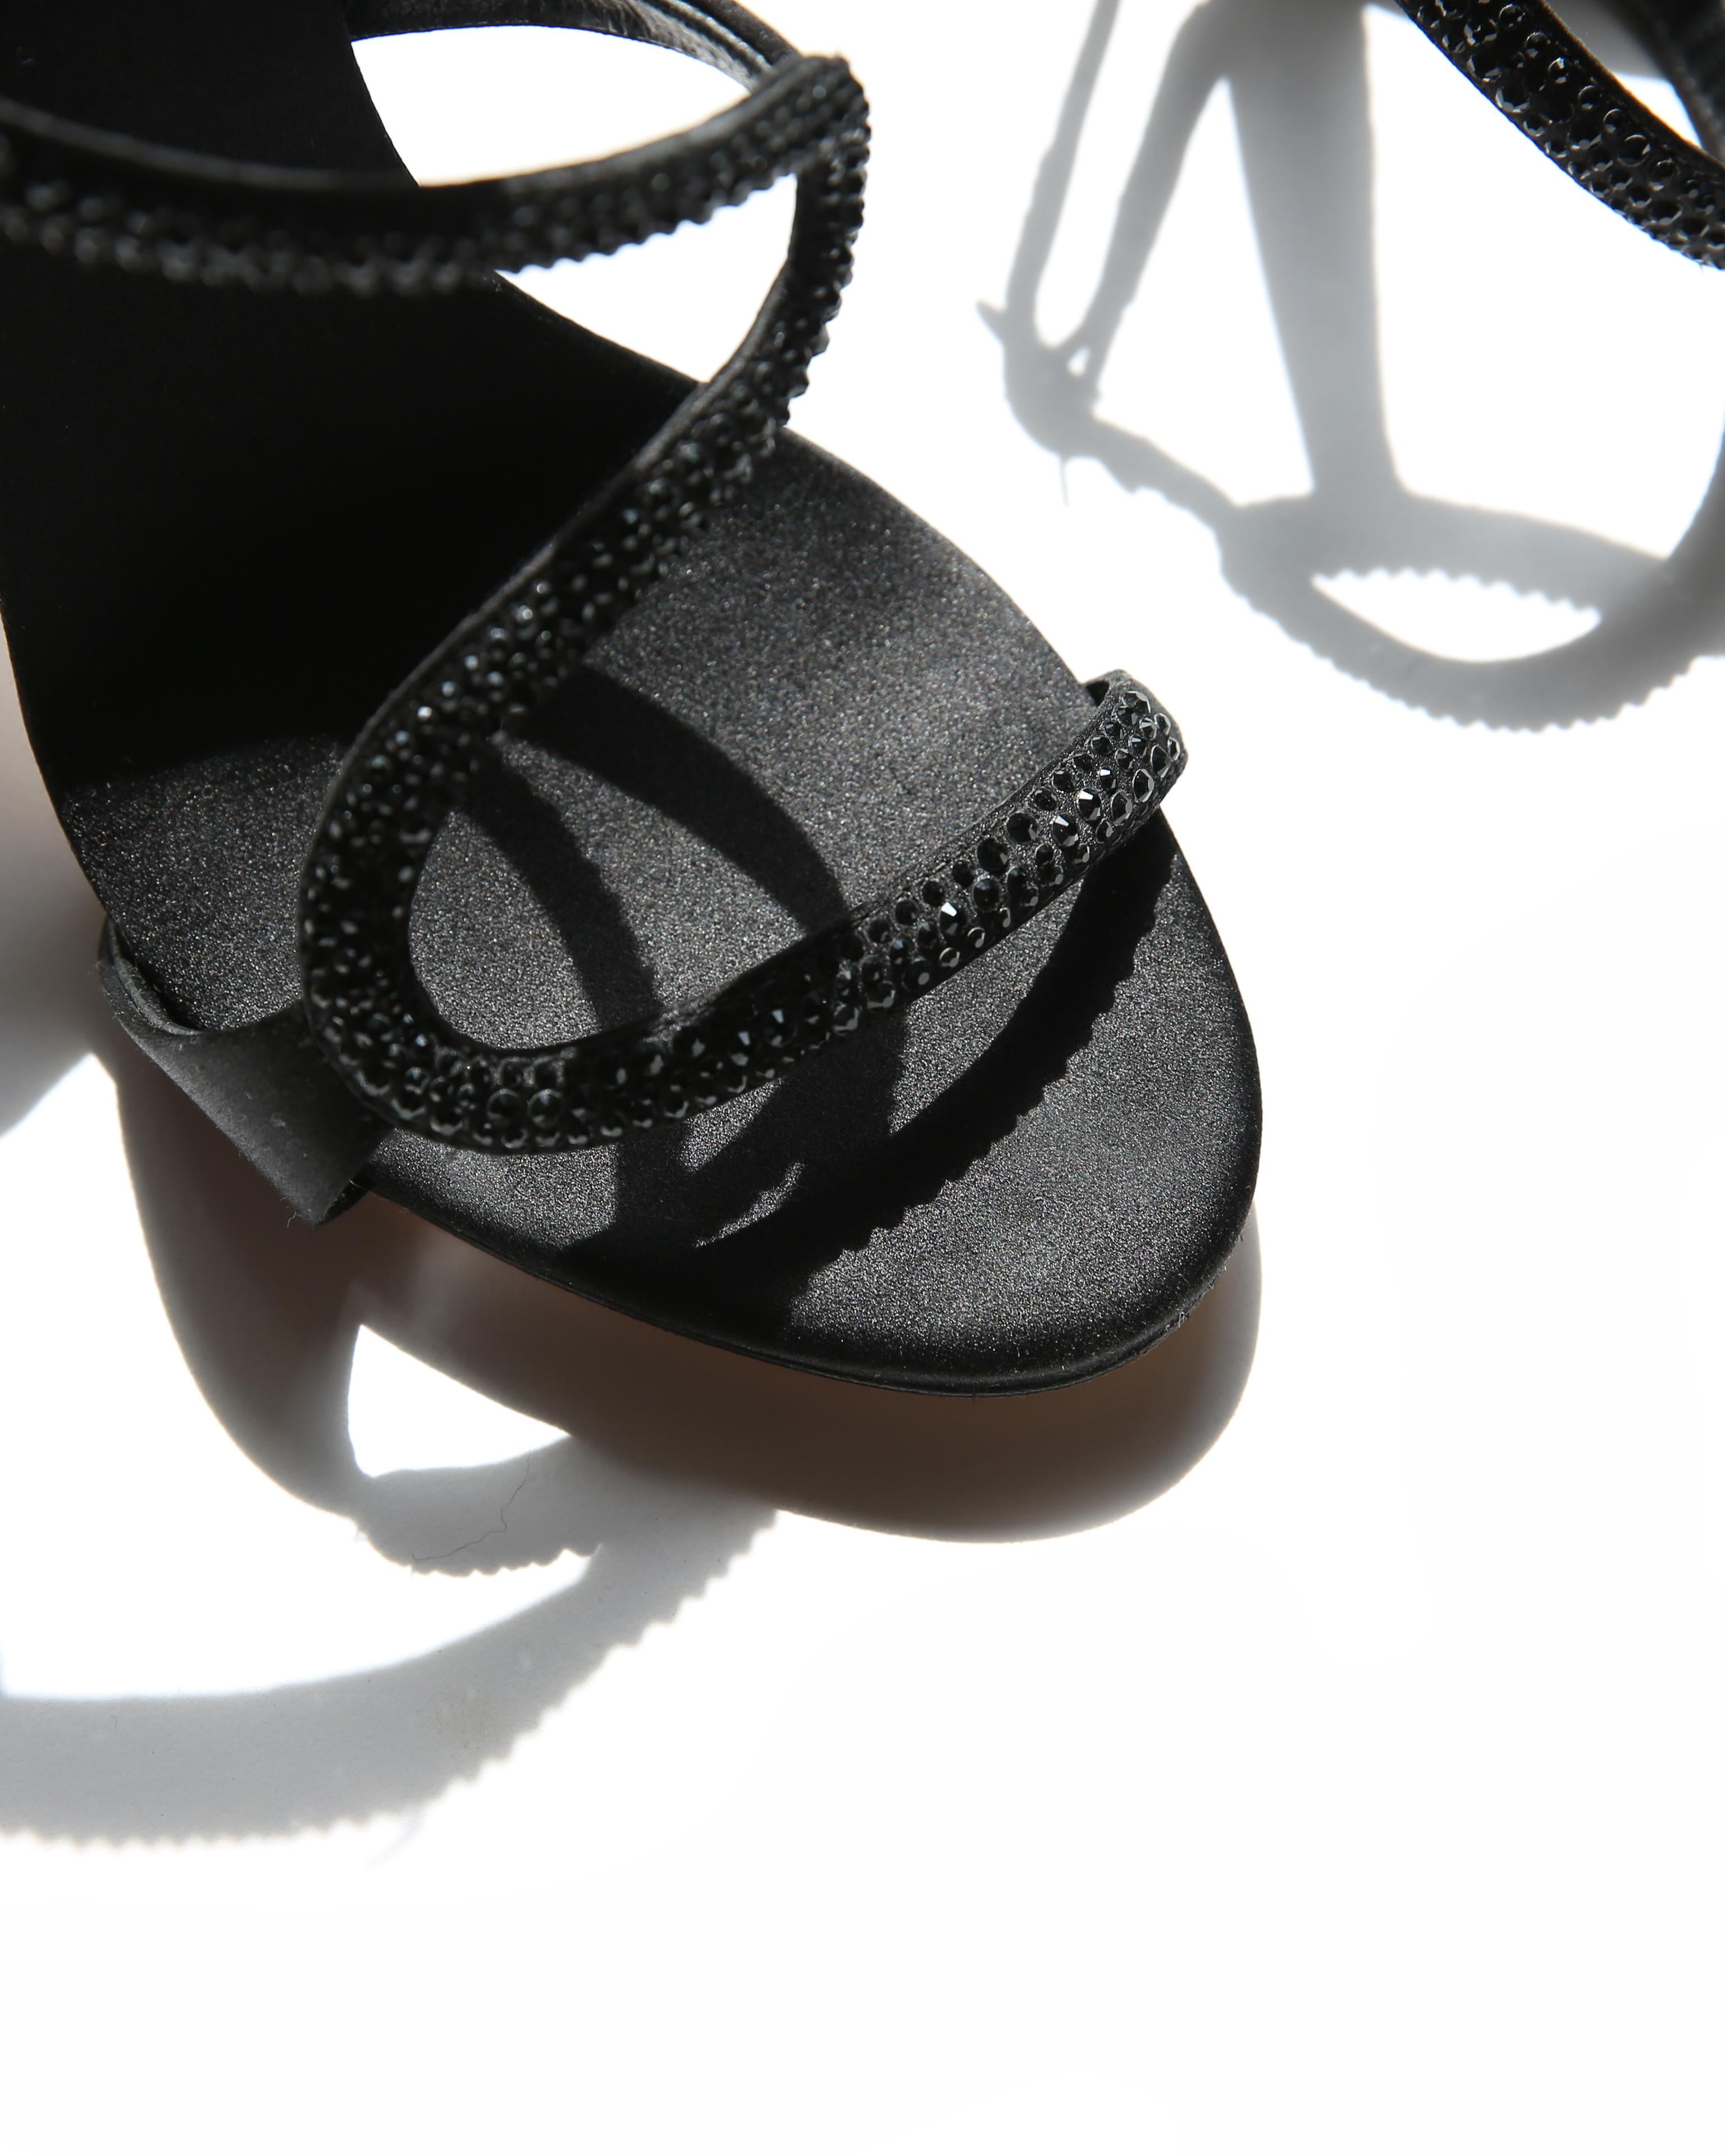 Black Giuseppe Zanotti black satin stiletto high heel swarovski crystal sandals 39 For Sale